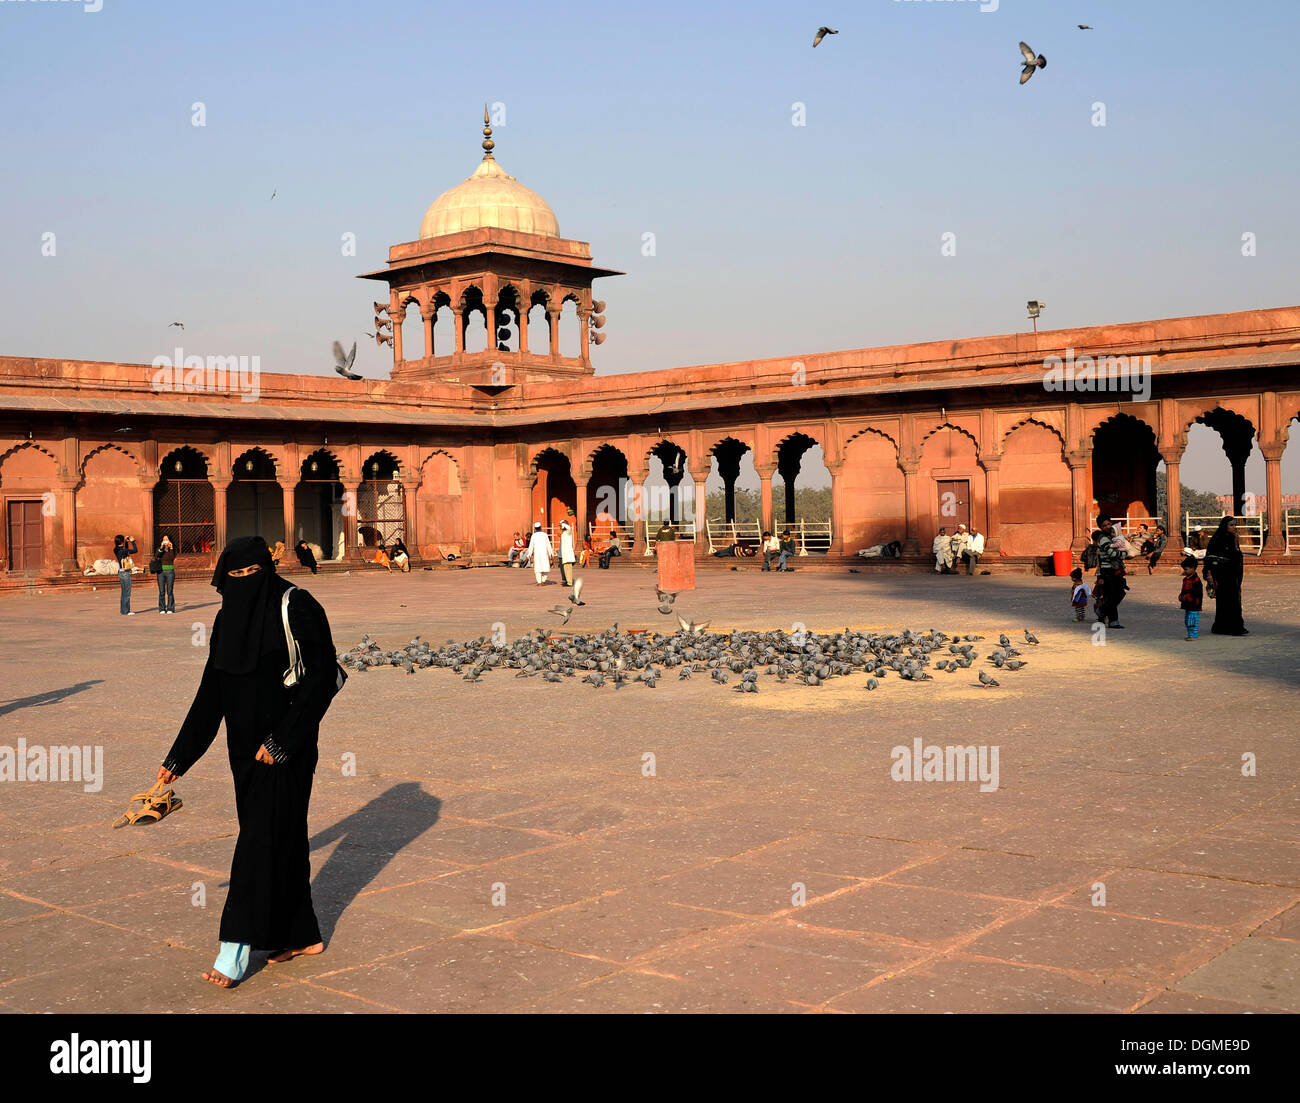 Cour de la mosquée de vendredi Jama Masjid, Old Delhi, Uttar Pradesh, Inde du Nord, Inde, Asie du Sud, Asie Banque D'Images